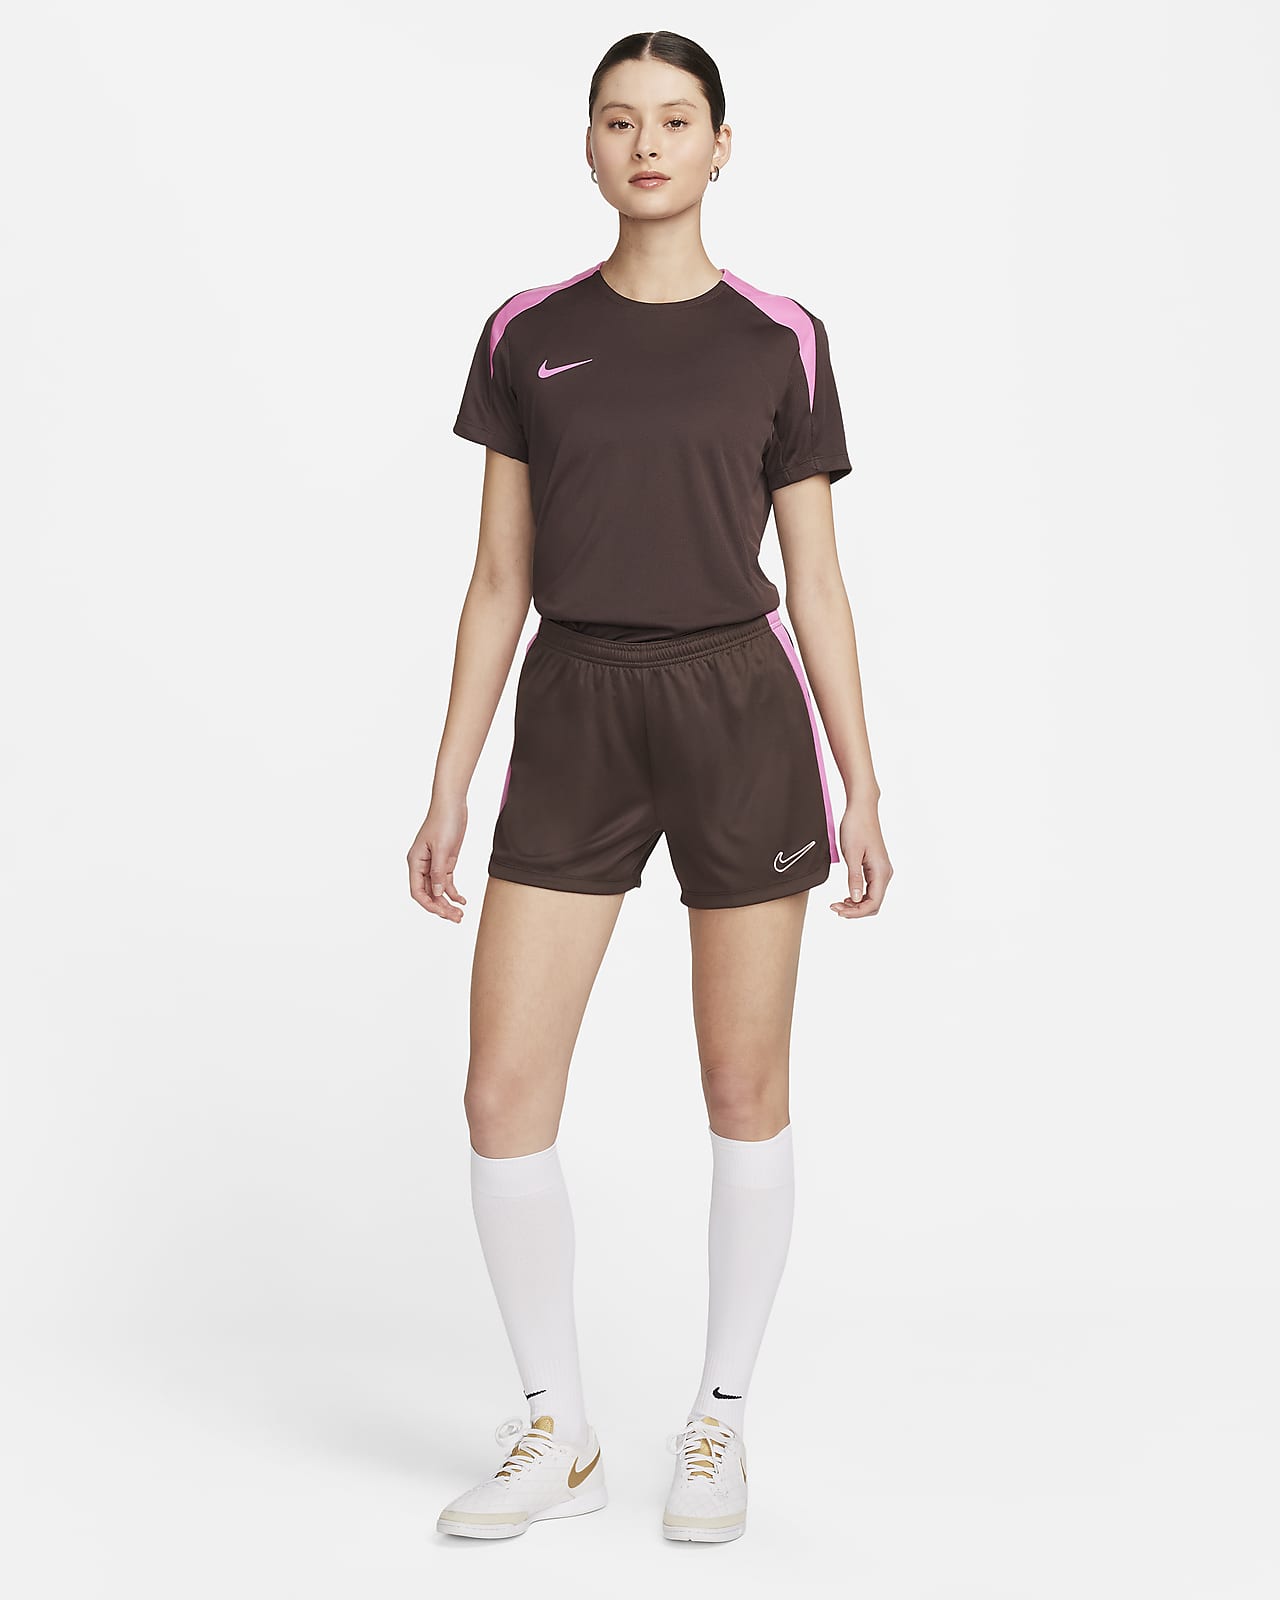 Nike Women\'s 23 Dri-FIT Shorts. Soccer Academy